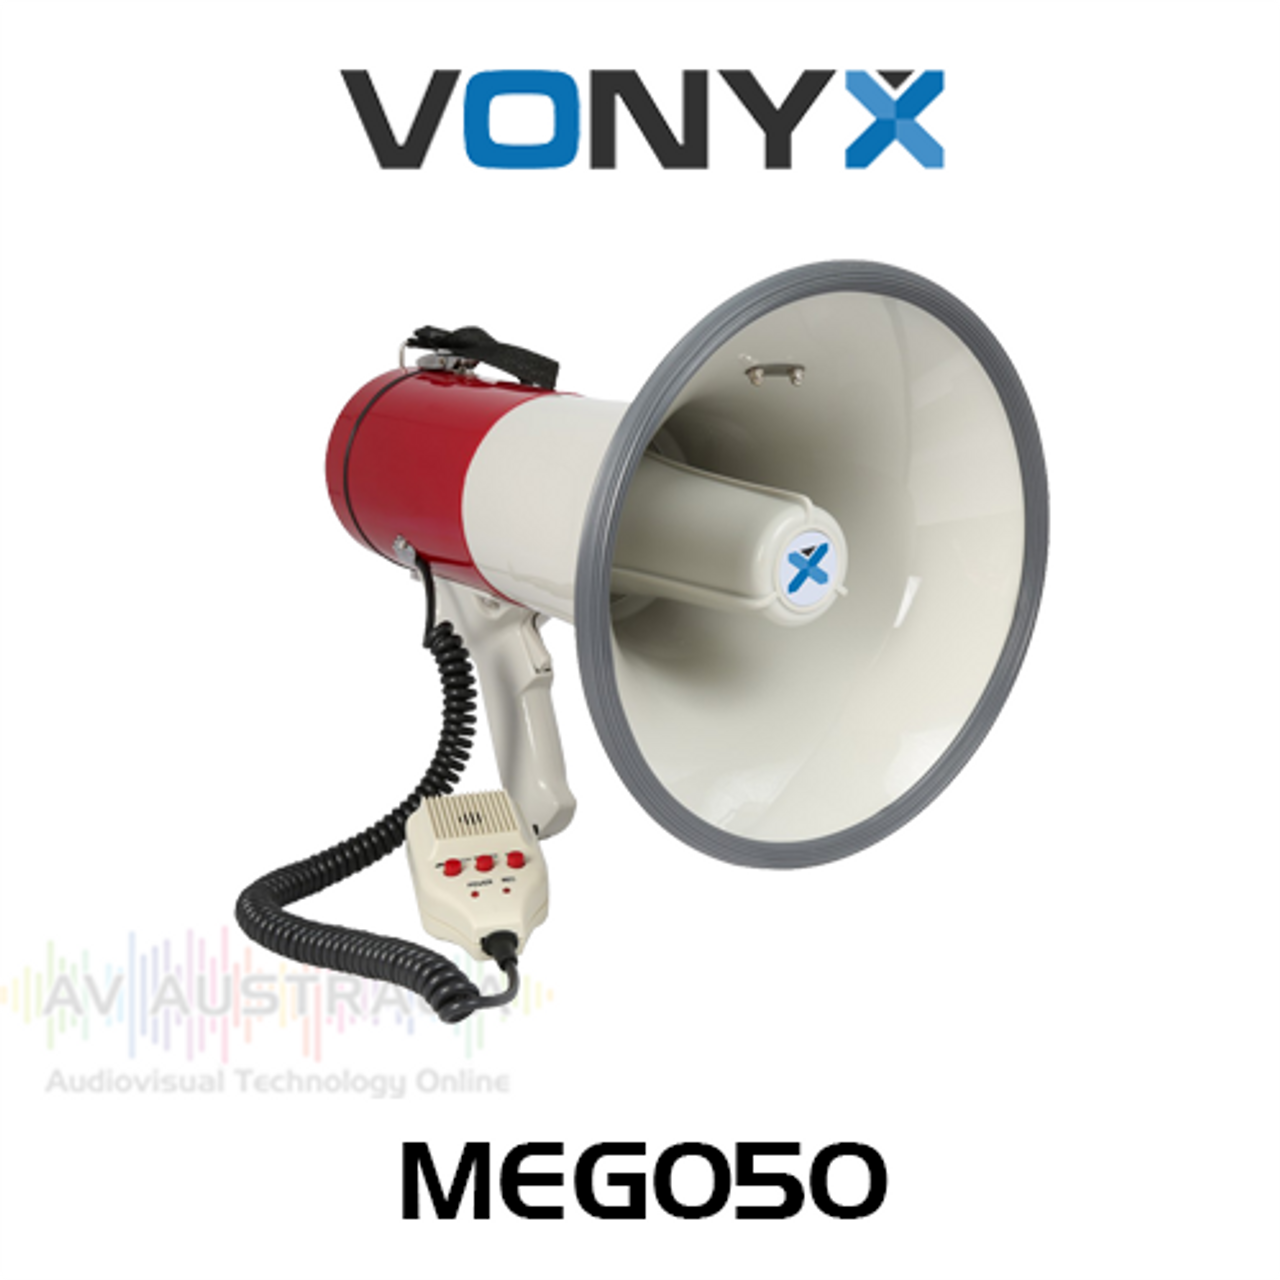 Vonyx MEG050 50W Megaphone with Siren & Microphone